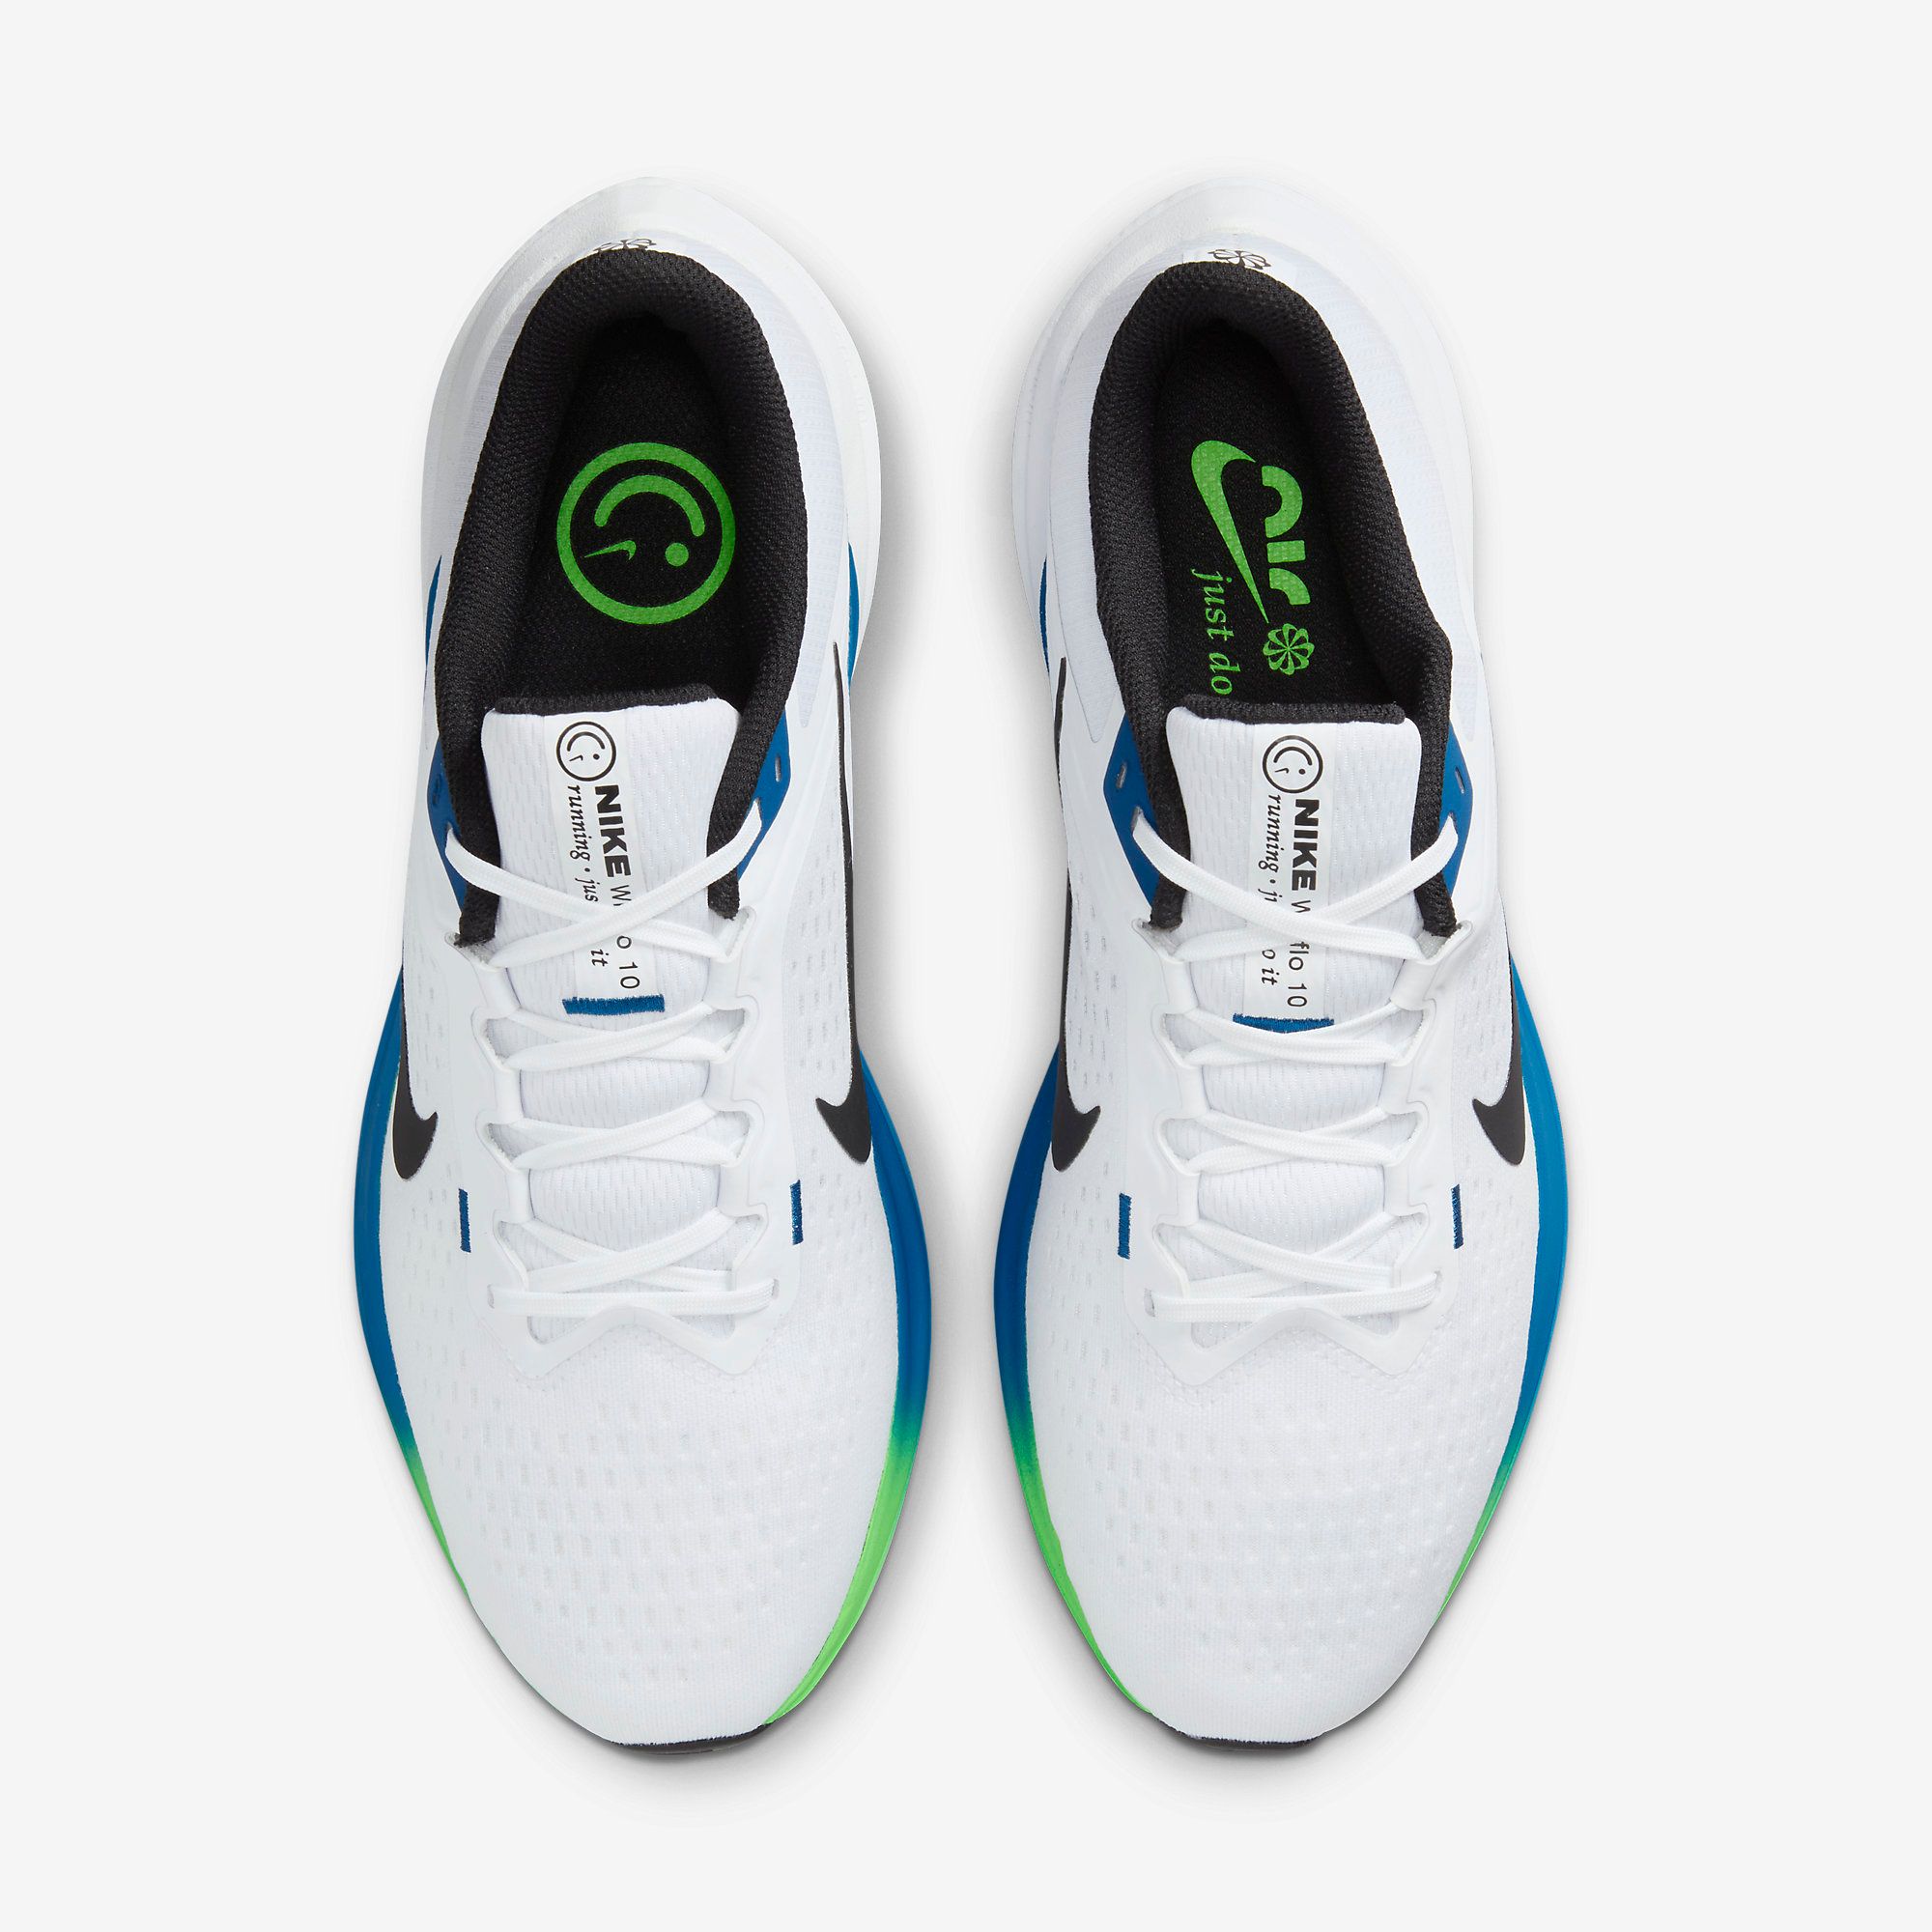  Nike Winflo 10 - White / Blue 